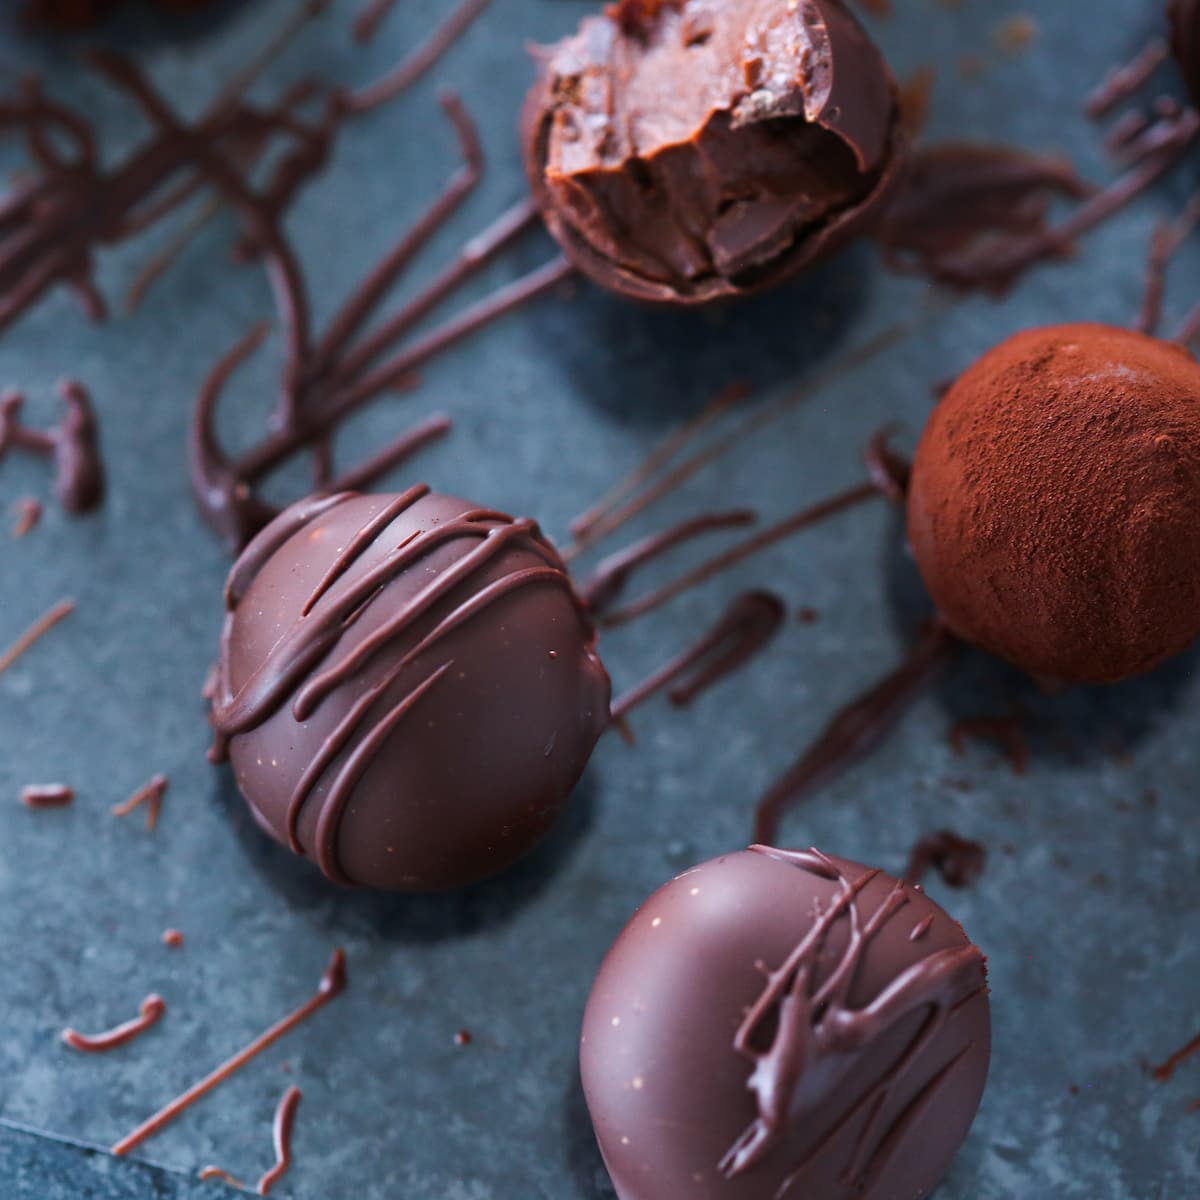 https://cheflindseyfarr.com/wp-content/uploads/2022/02/bourbon-dark-chocolate-truffles-enrobed-featured.jpg